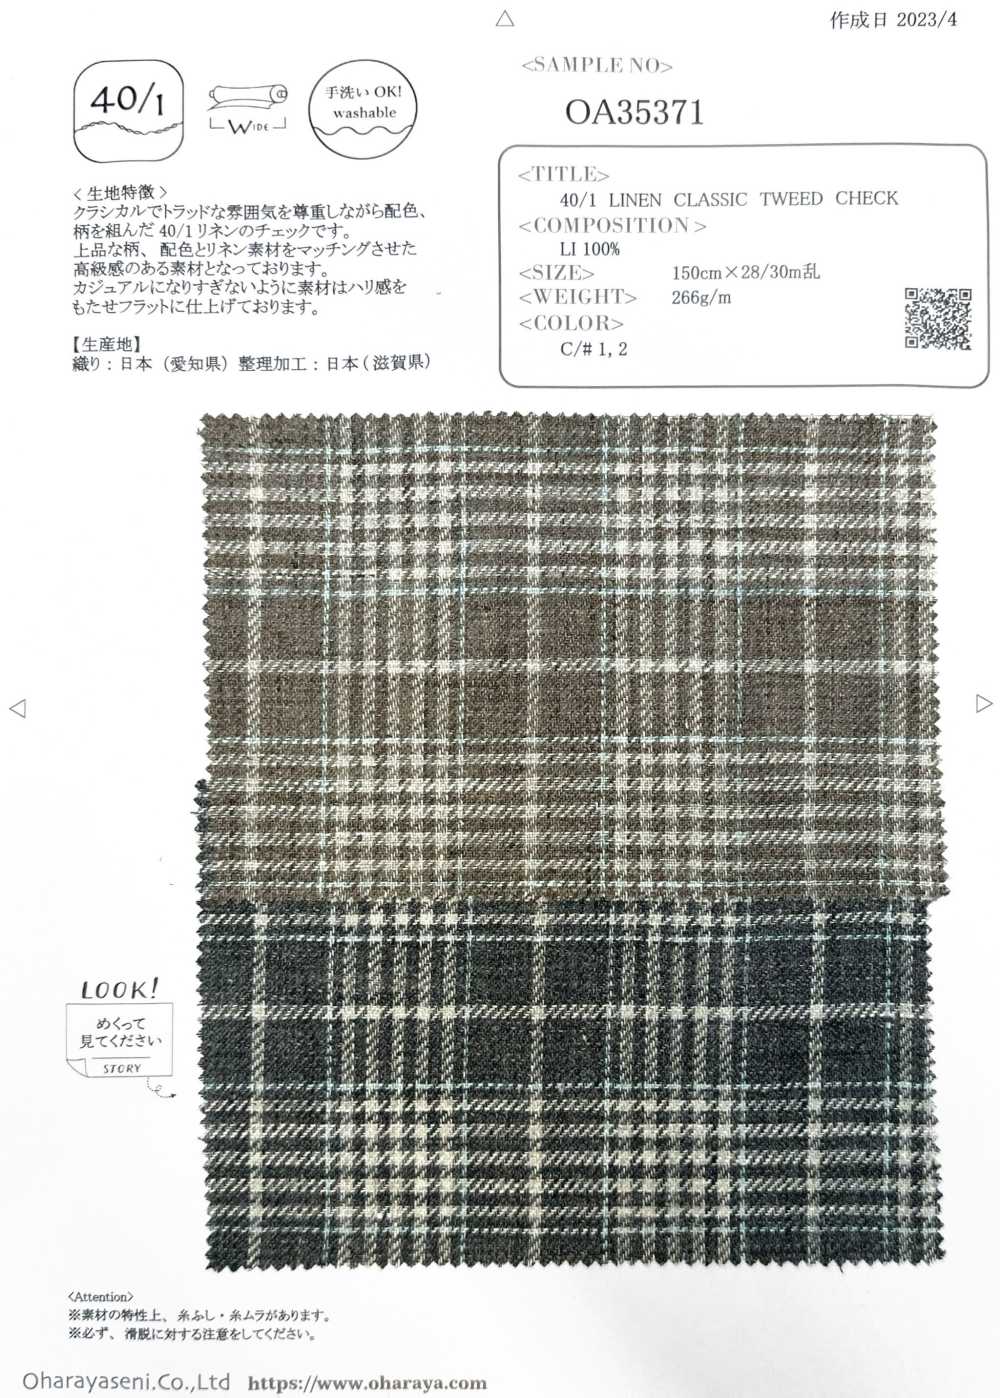 OA35371 40/1 LINEN CLASSIC TWEED CHECK[Textile / Fabric] Oharayaseni